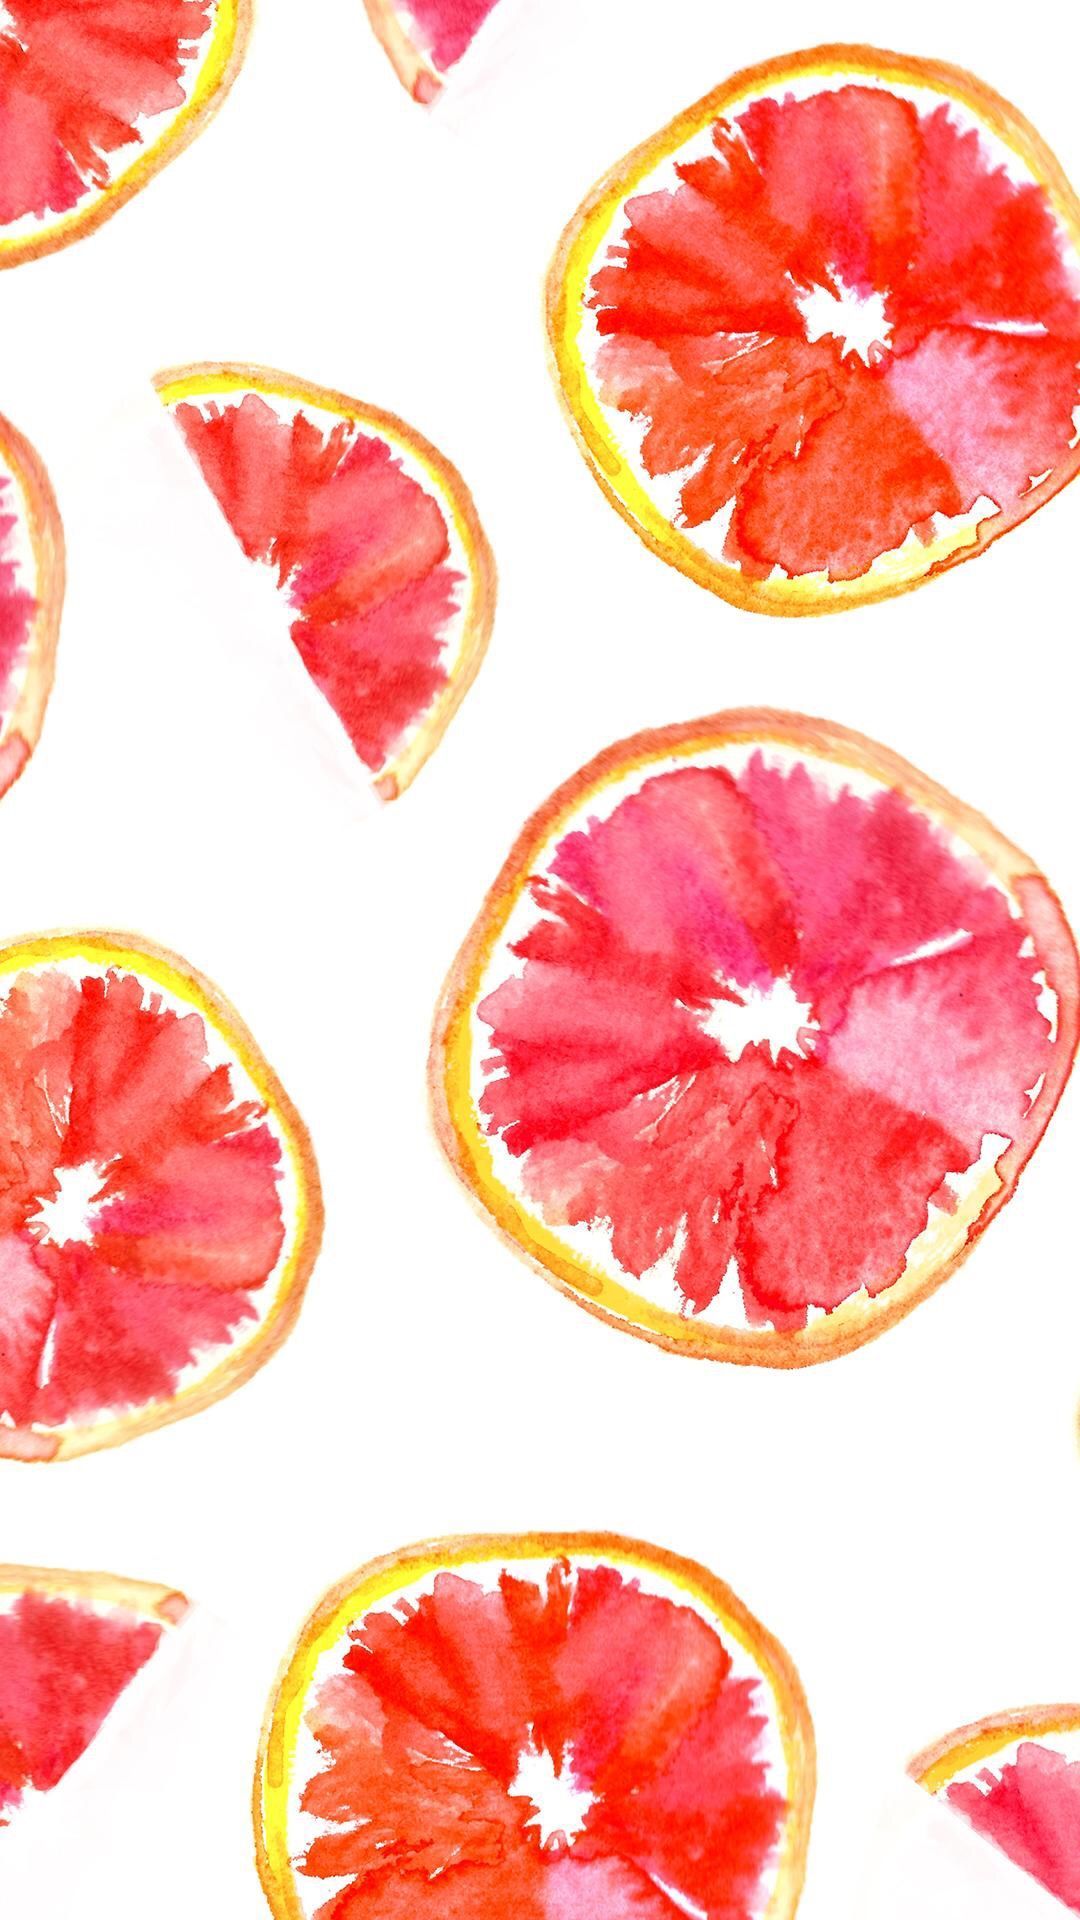 Watercolor Fruit Wallpapers